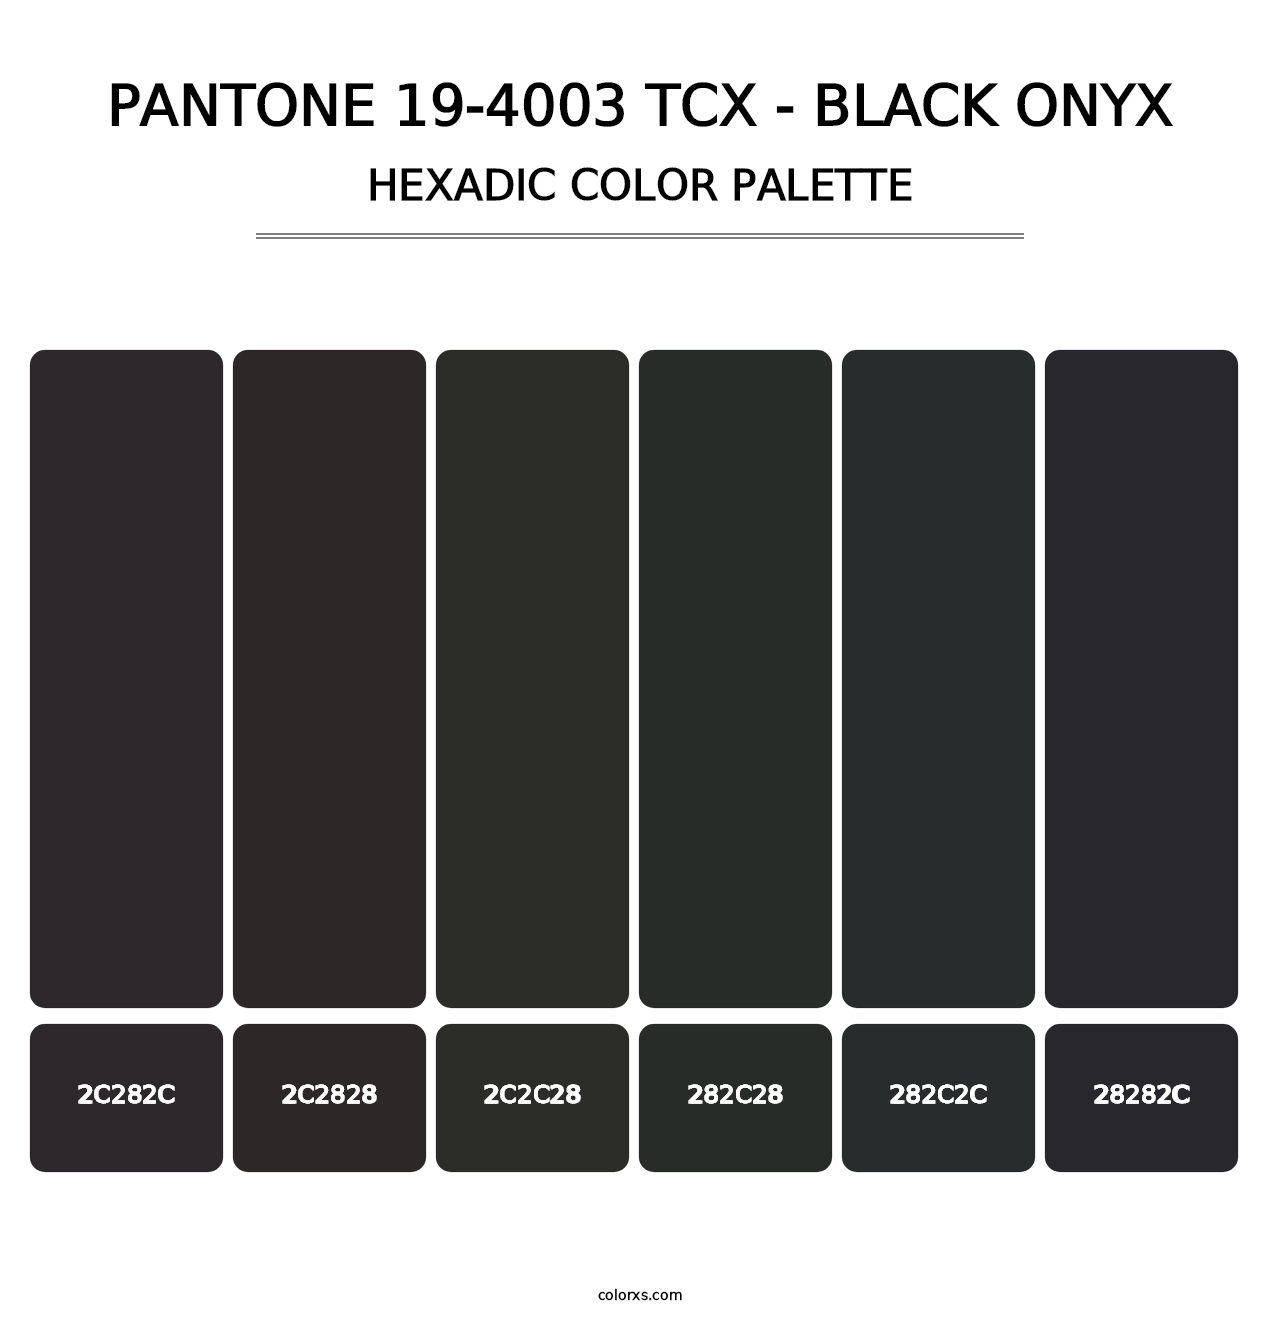 PANTONE 19-4003 TCX - Black Onyx - Hexadic Color Palette